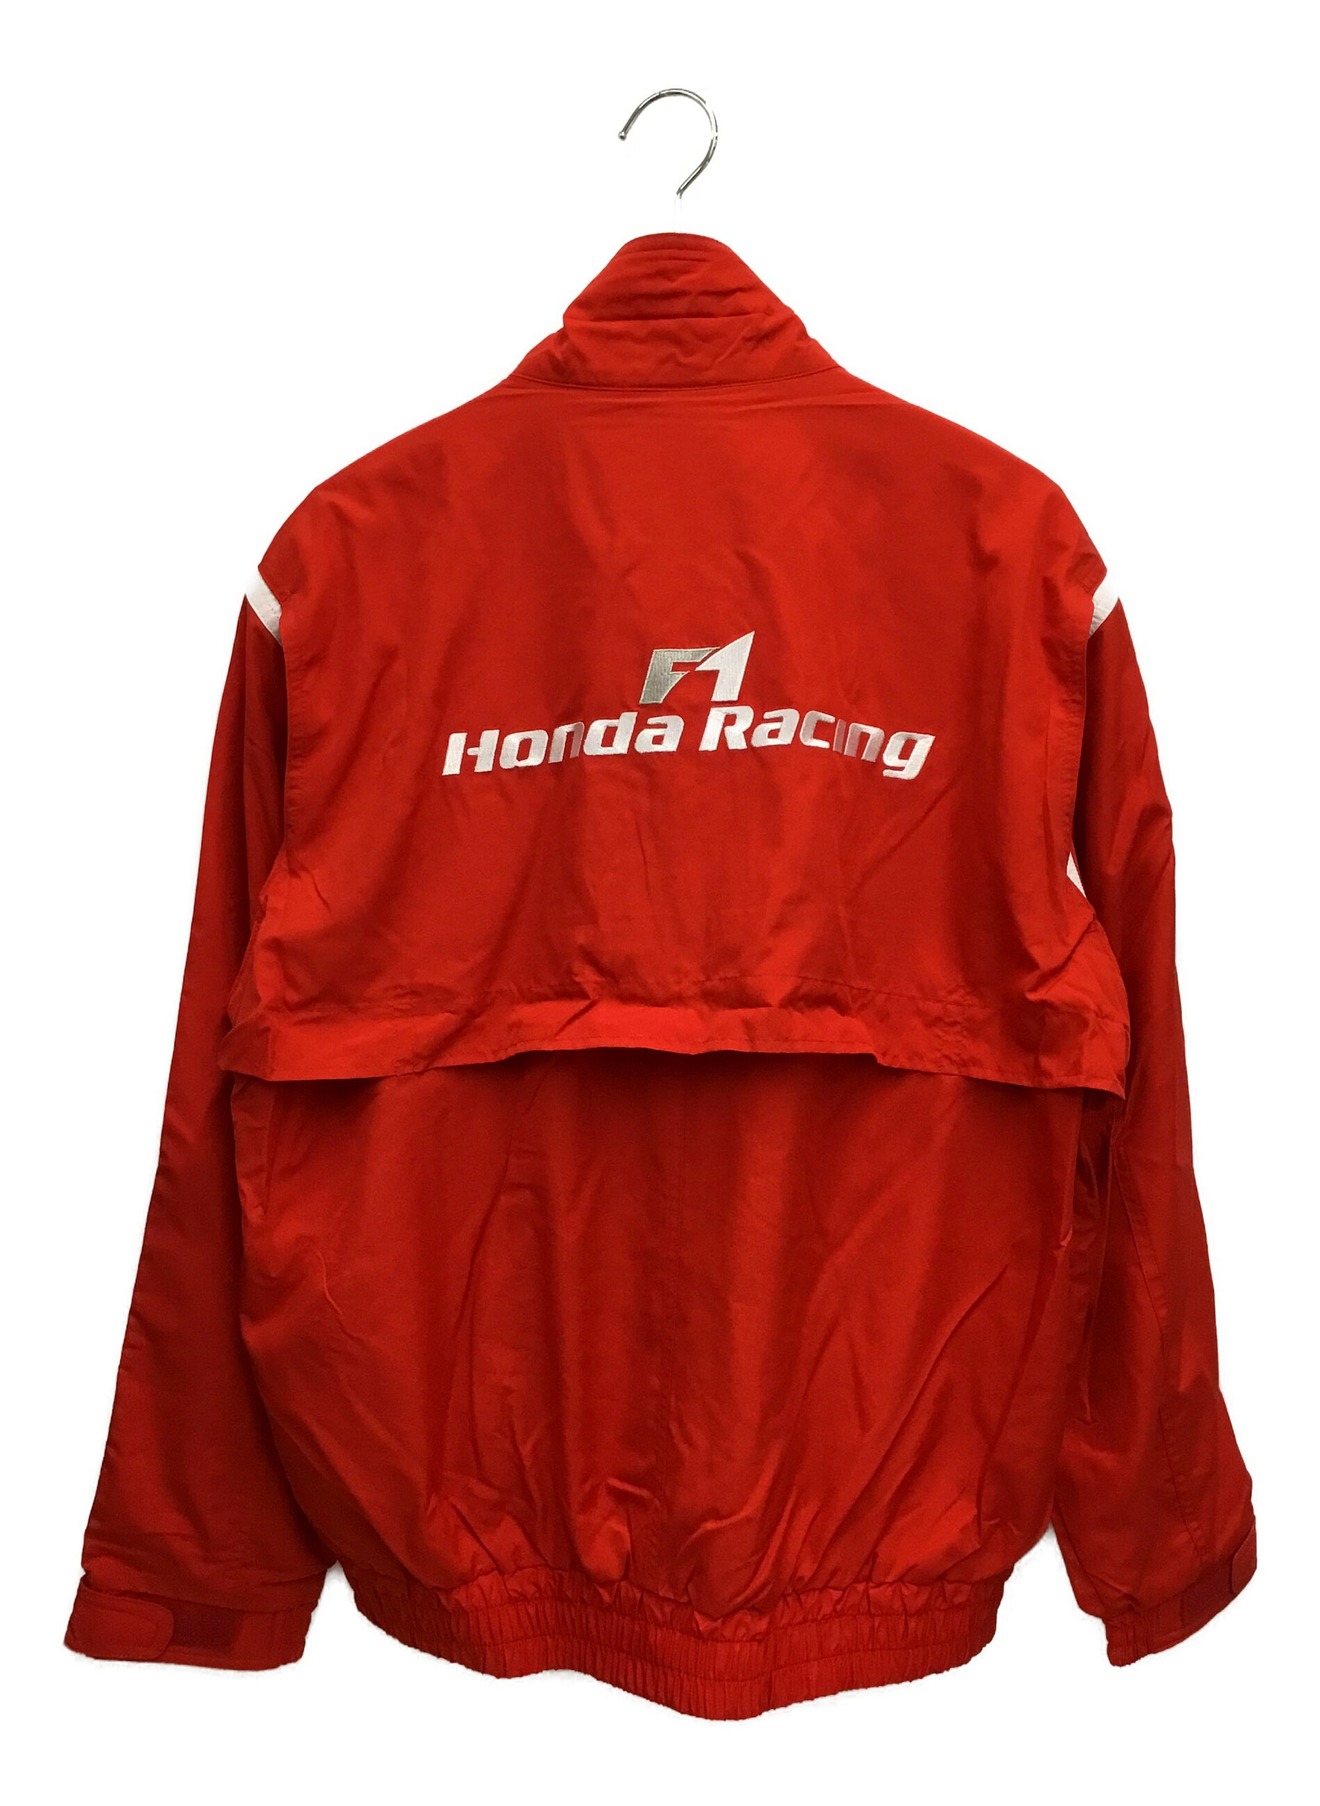 HONDA Racing (ホンダレーシング) HONDA Racing F1 ブルゾン レッド サイズ:L